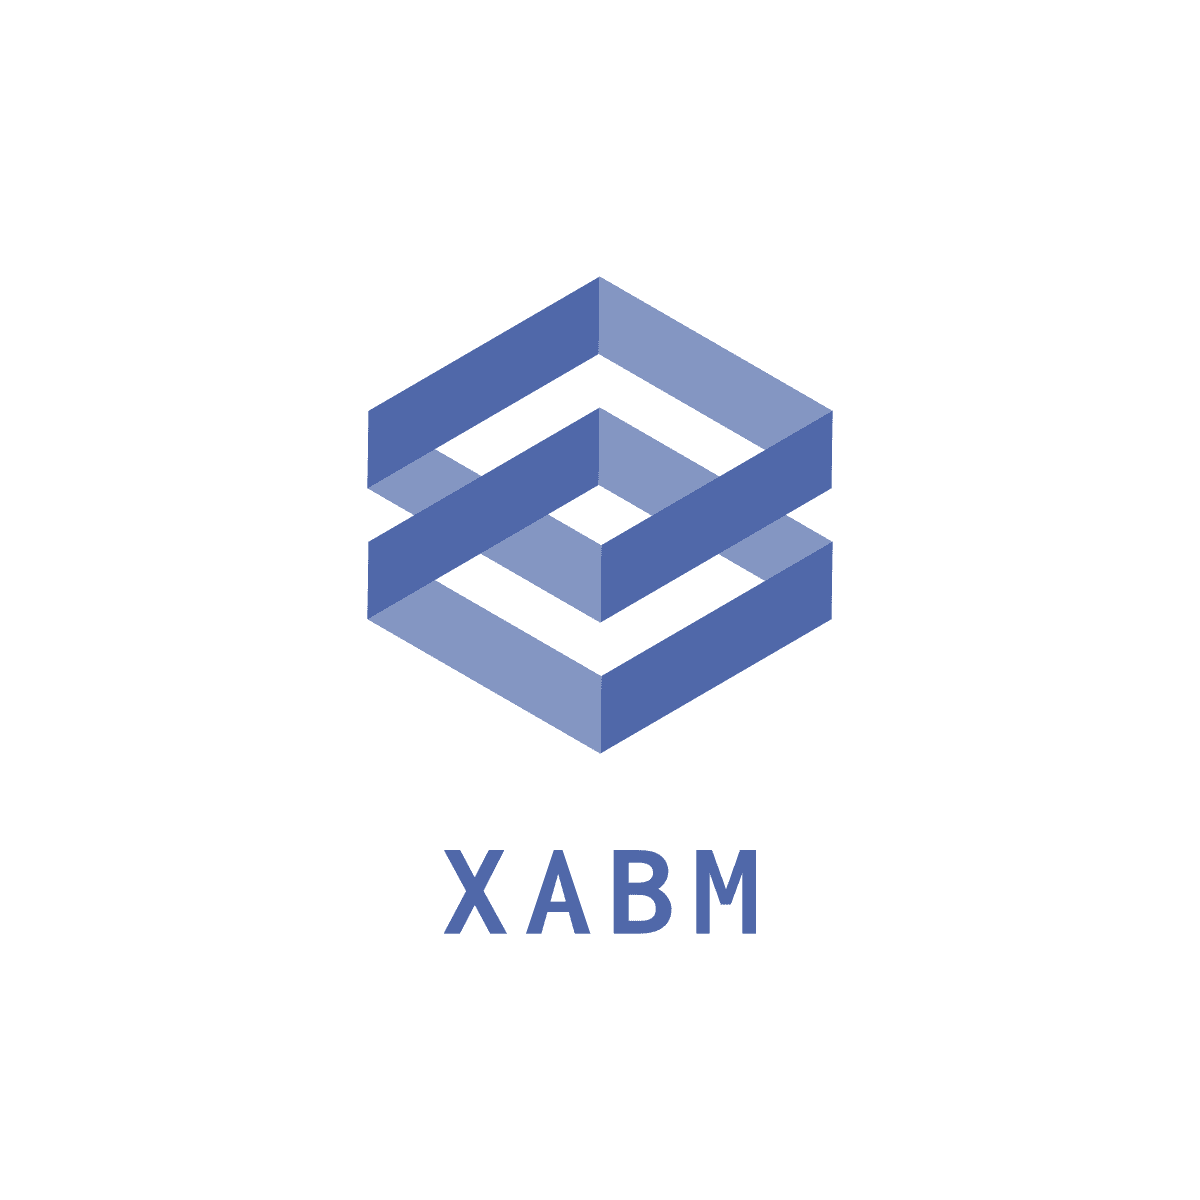 XABM – Account Based Marketing